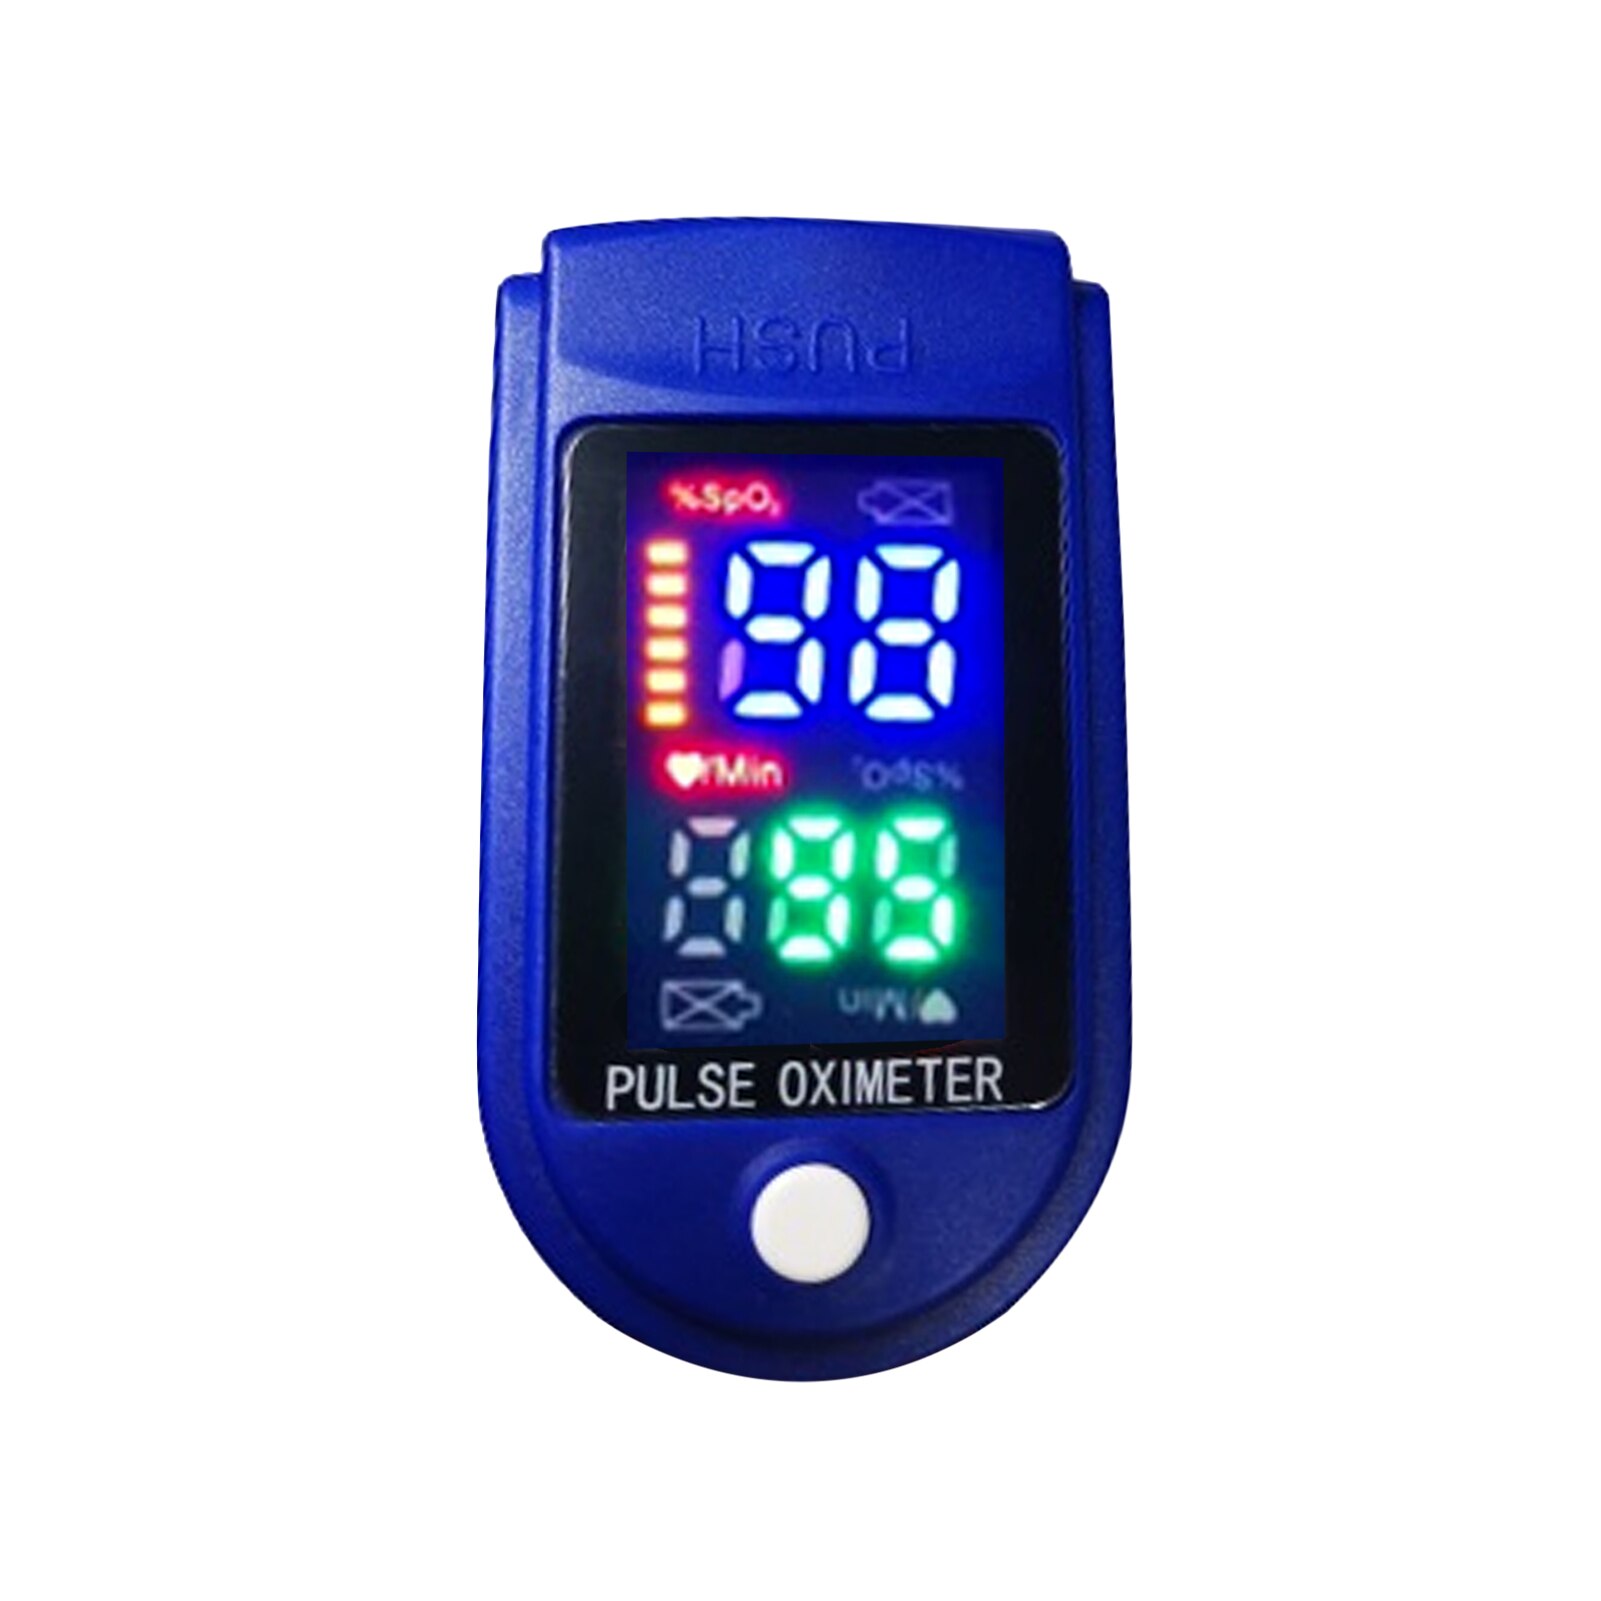 Pulsoximeter napalcowy pulsoksymetr blod ilt finger puls digital fingerspids oximeter iltmætning monitor oximetro: Md1814